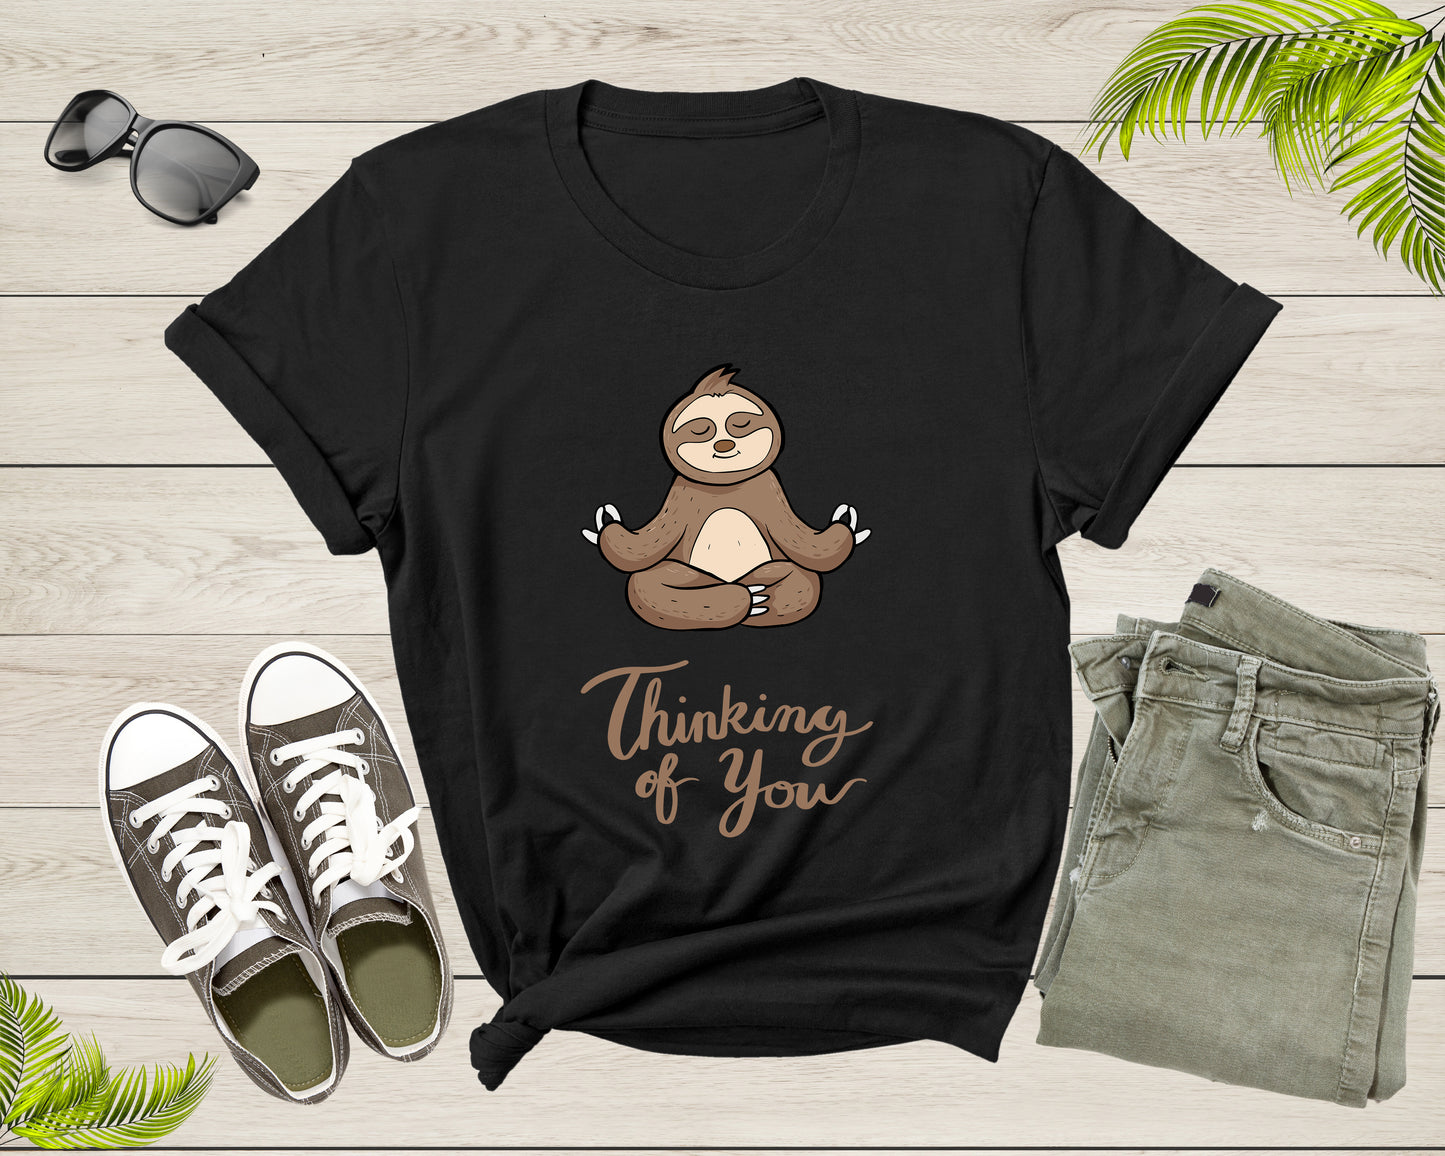 Thinking of You Sloth Yoga Meditation Animal Sit Relaxing T-Shirt Cute Cool Sloth Lover Gift T Shirt for Men Women Kids Boys Girls Tshirt